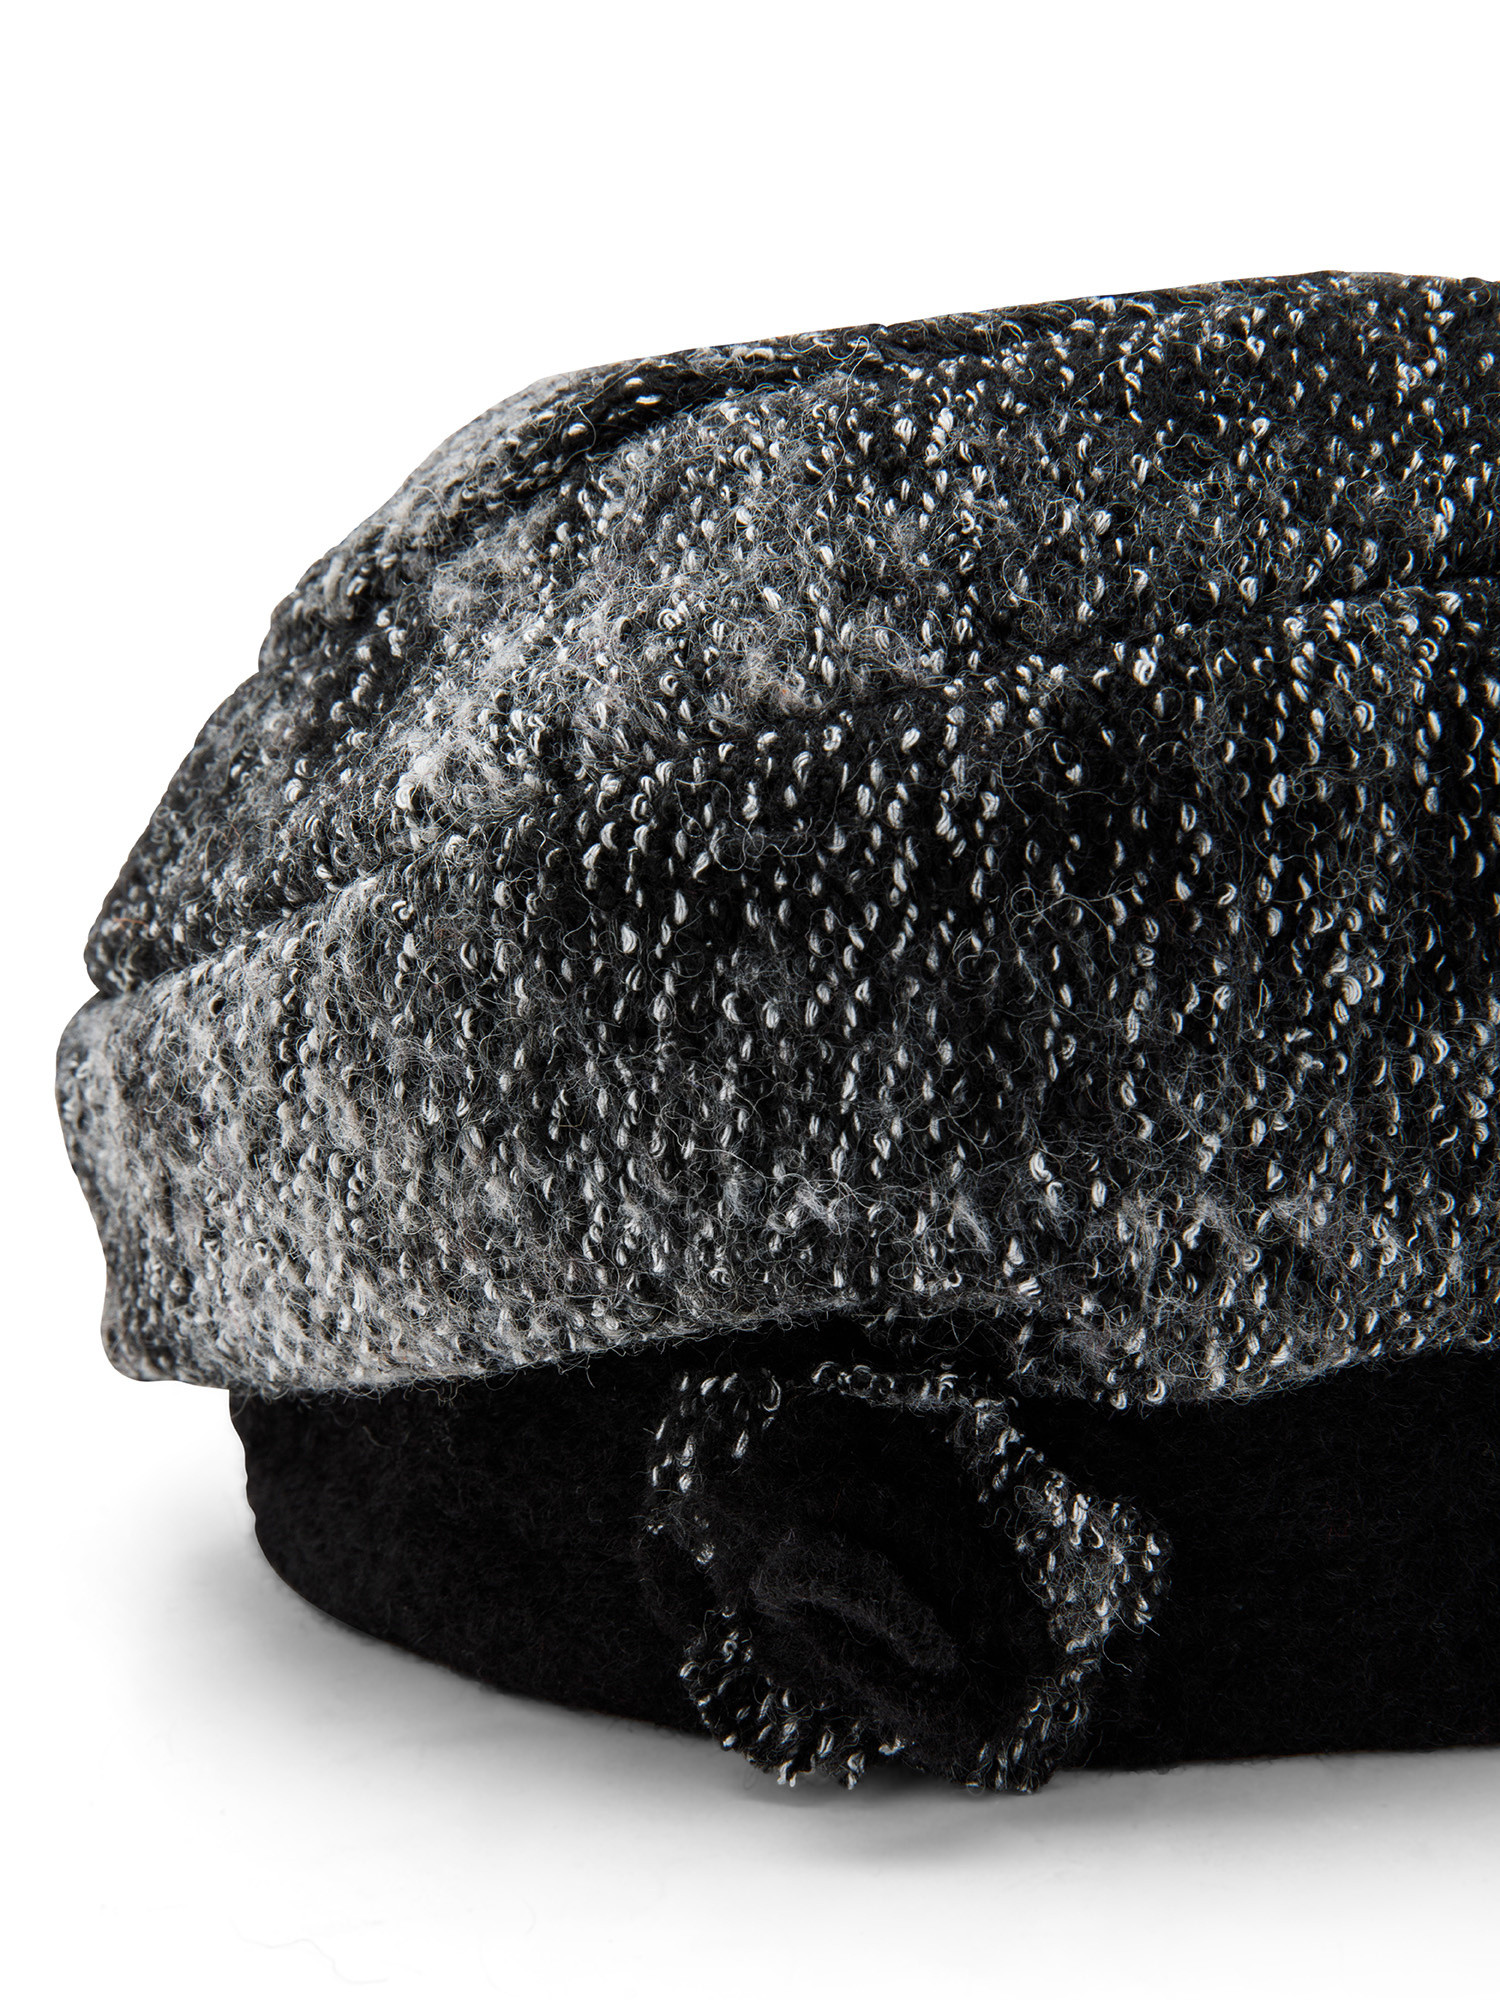 Koan - Scottish beret with application, Black, large image number 1